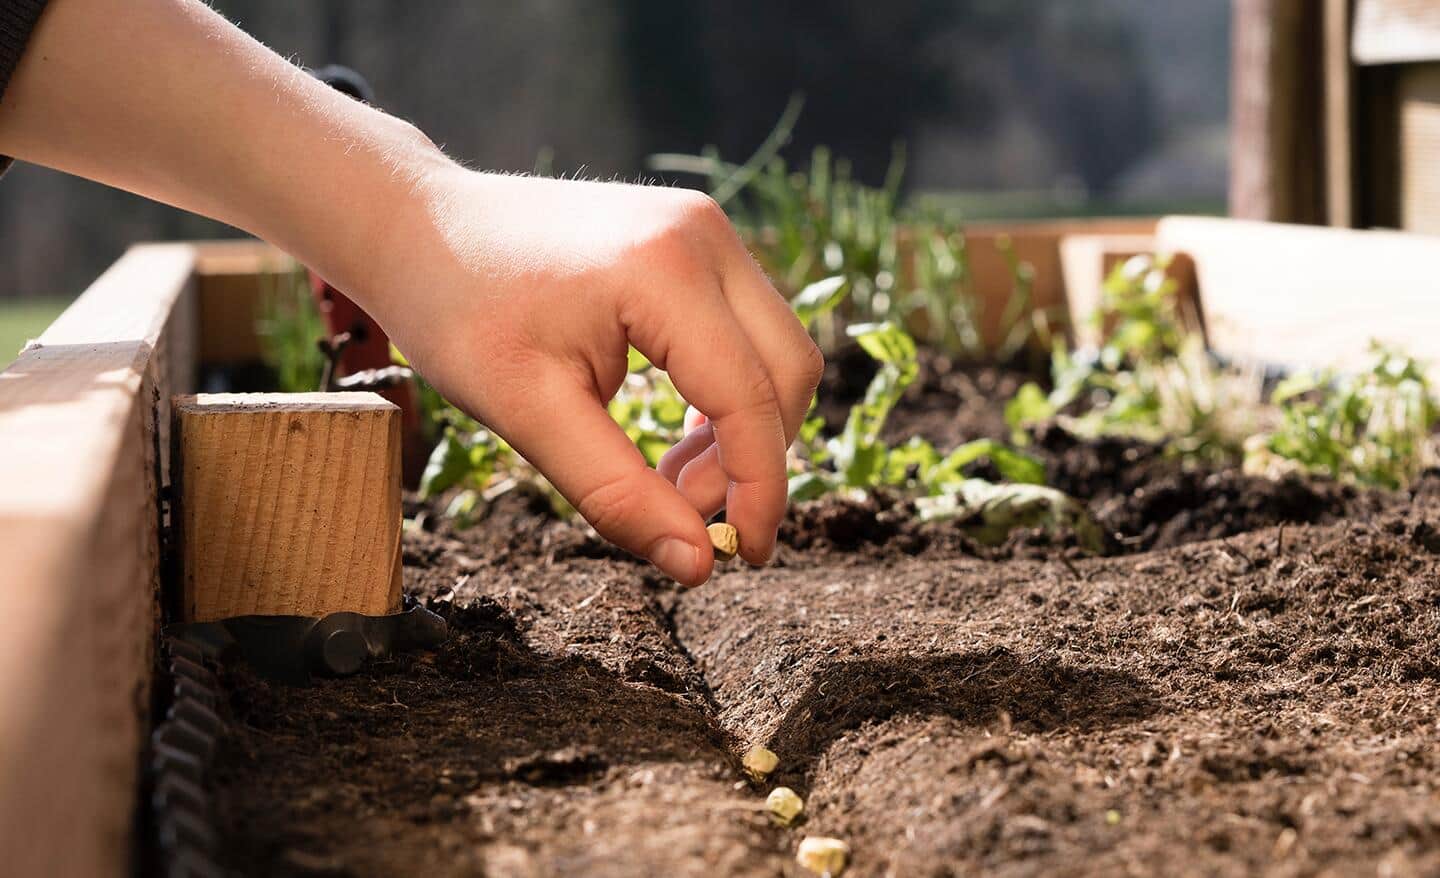 Gardener placing seeds in soil in a raised garden bed